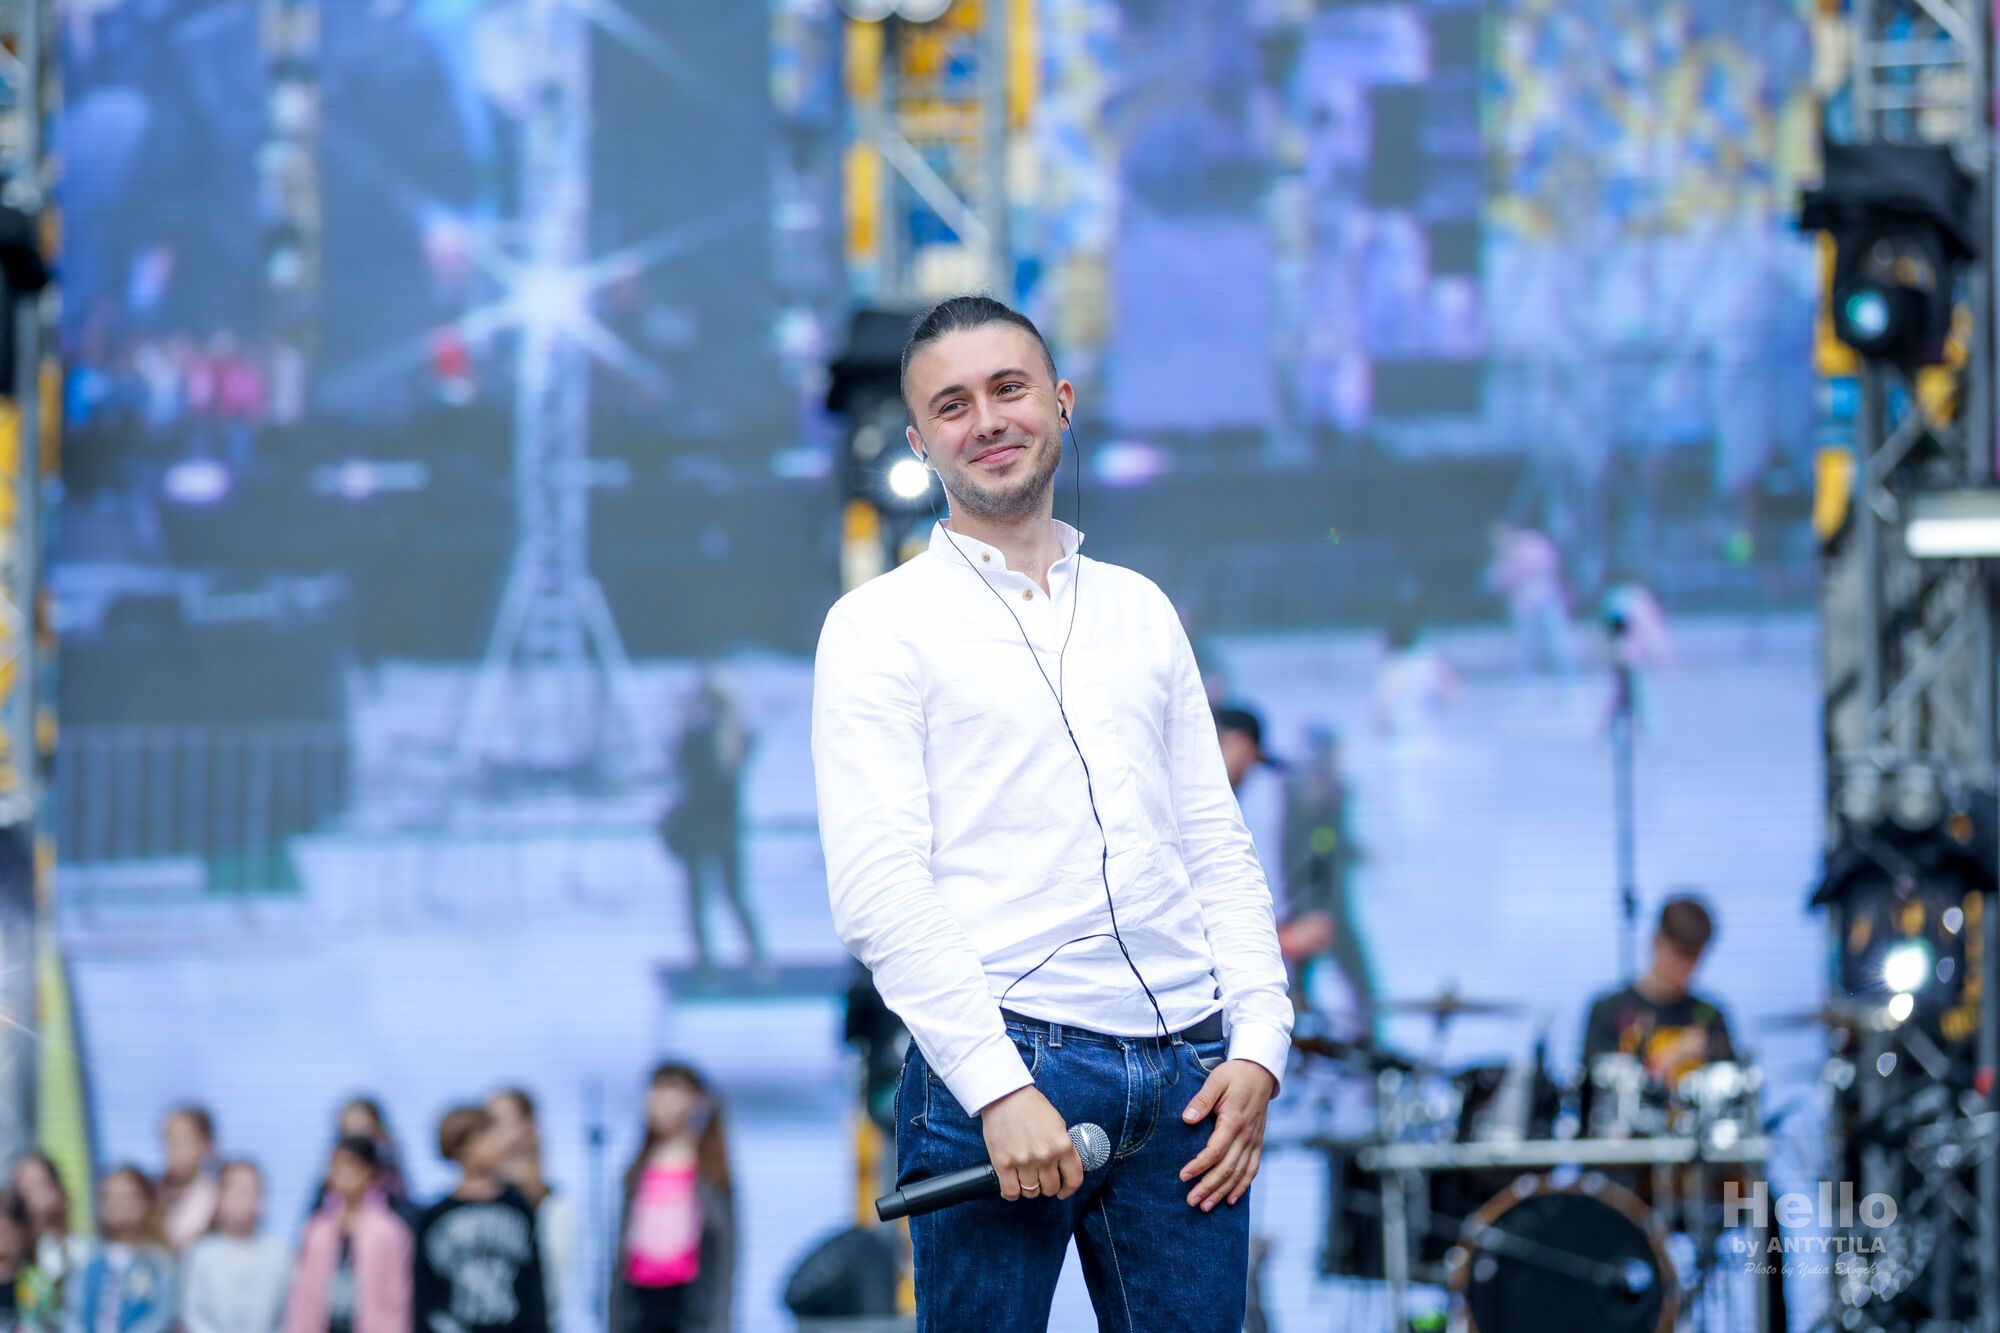 Група "Антитіла" та канал "Україна" запустили всеукраїнський конкурс